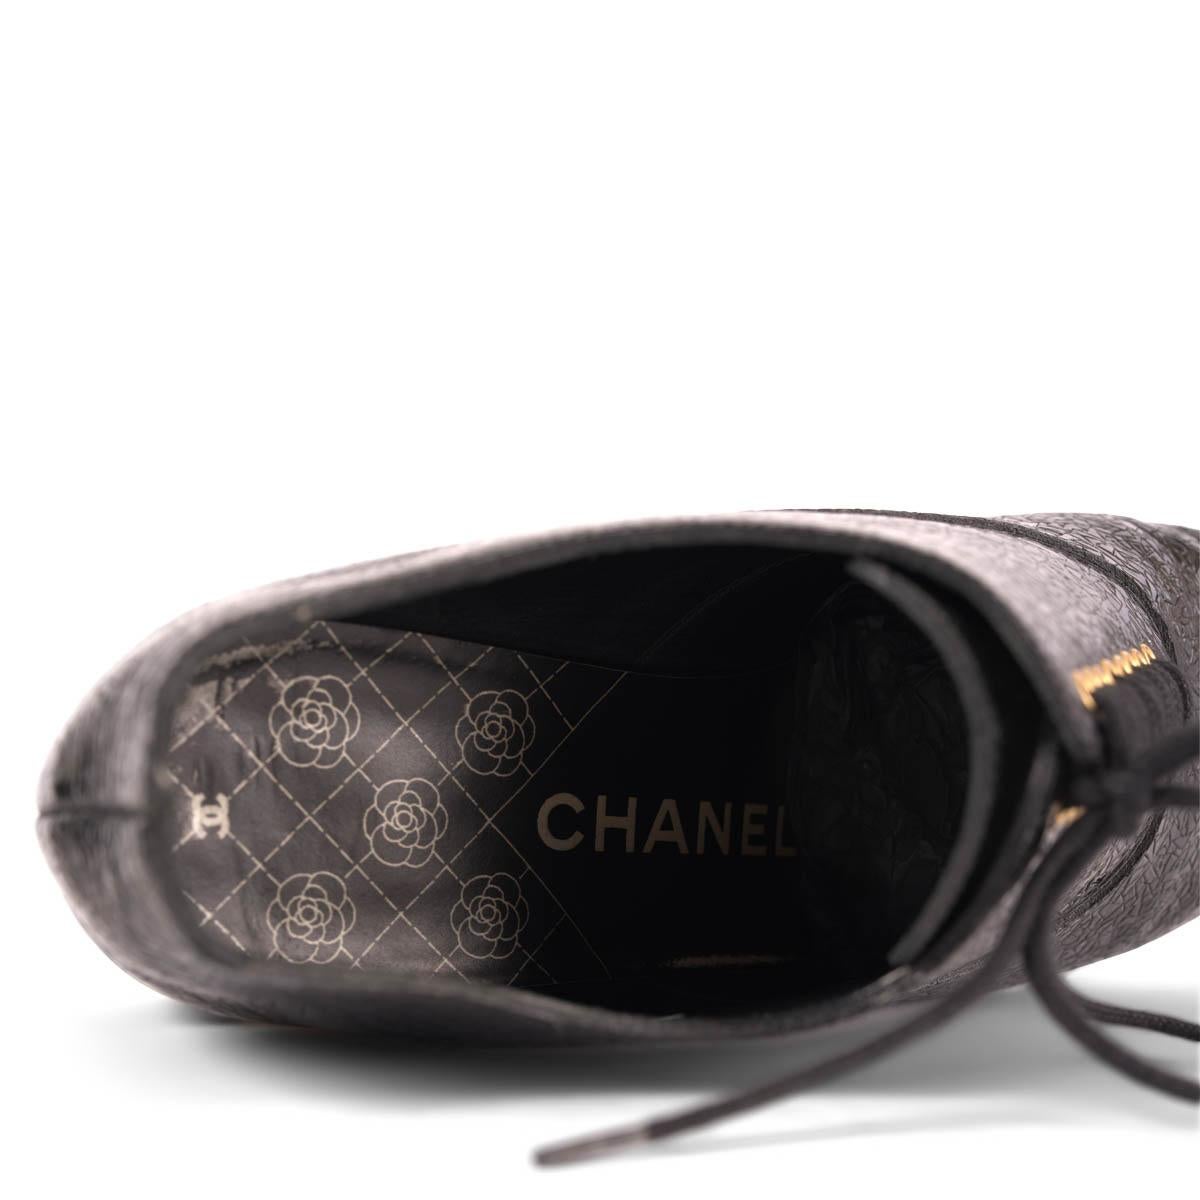 CHANEL black textured patent leather 2017 17C CUBA Lace-Up Shoes 38.5 4